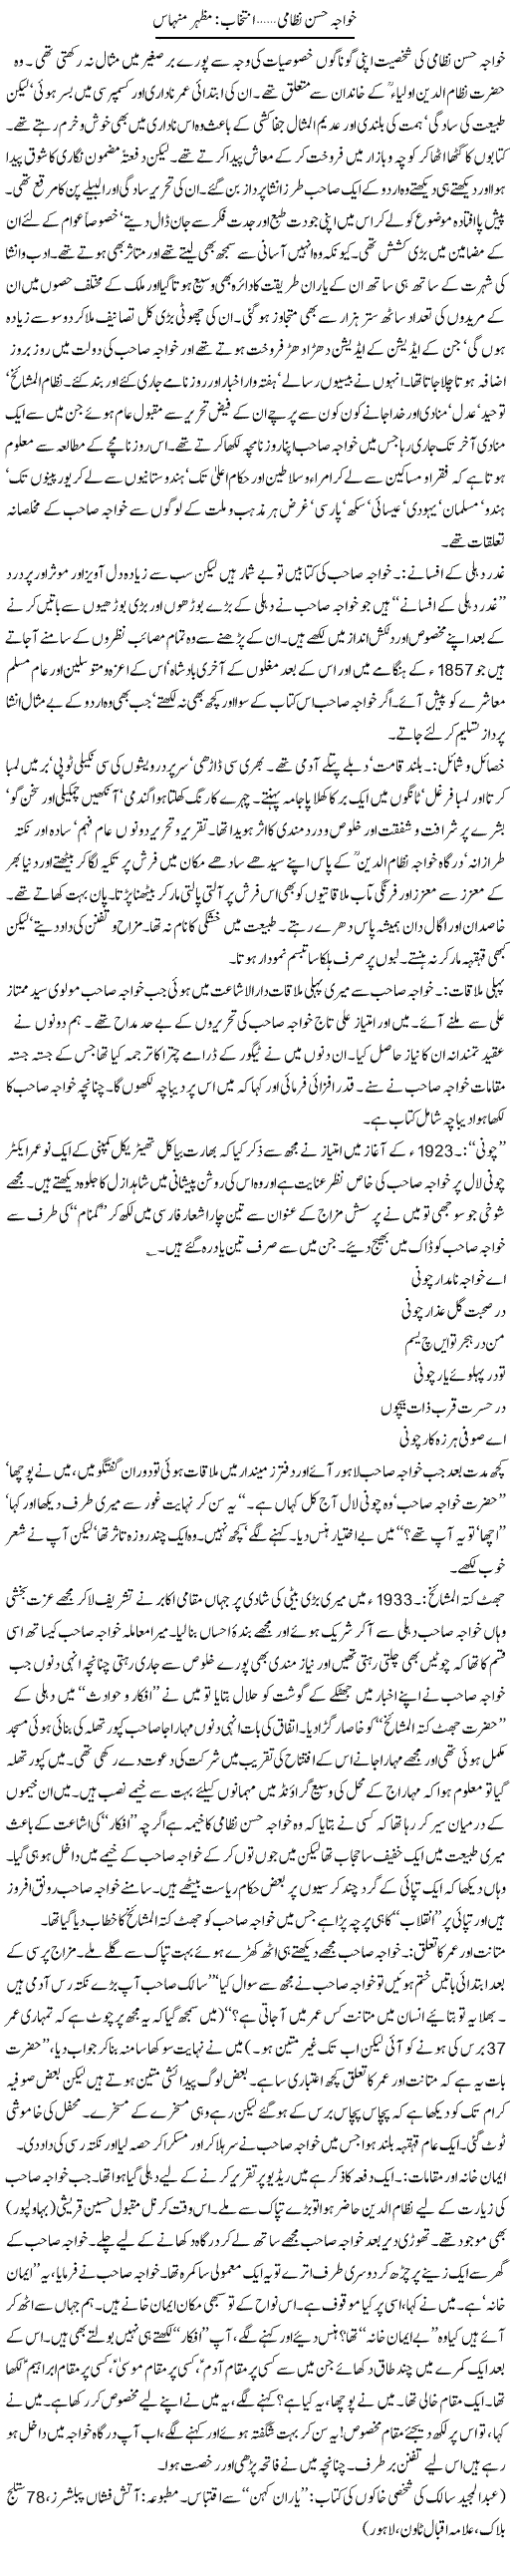 Khwaja Hassan Nizami | Mazhar Minhas | Daily Urdu Columns